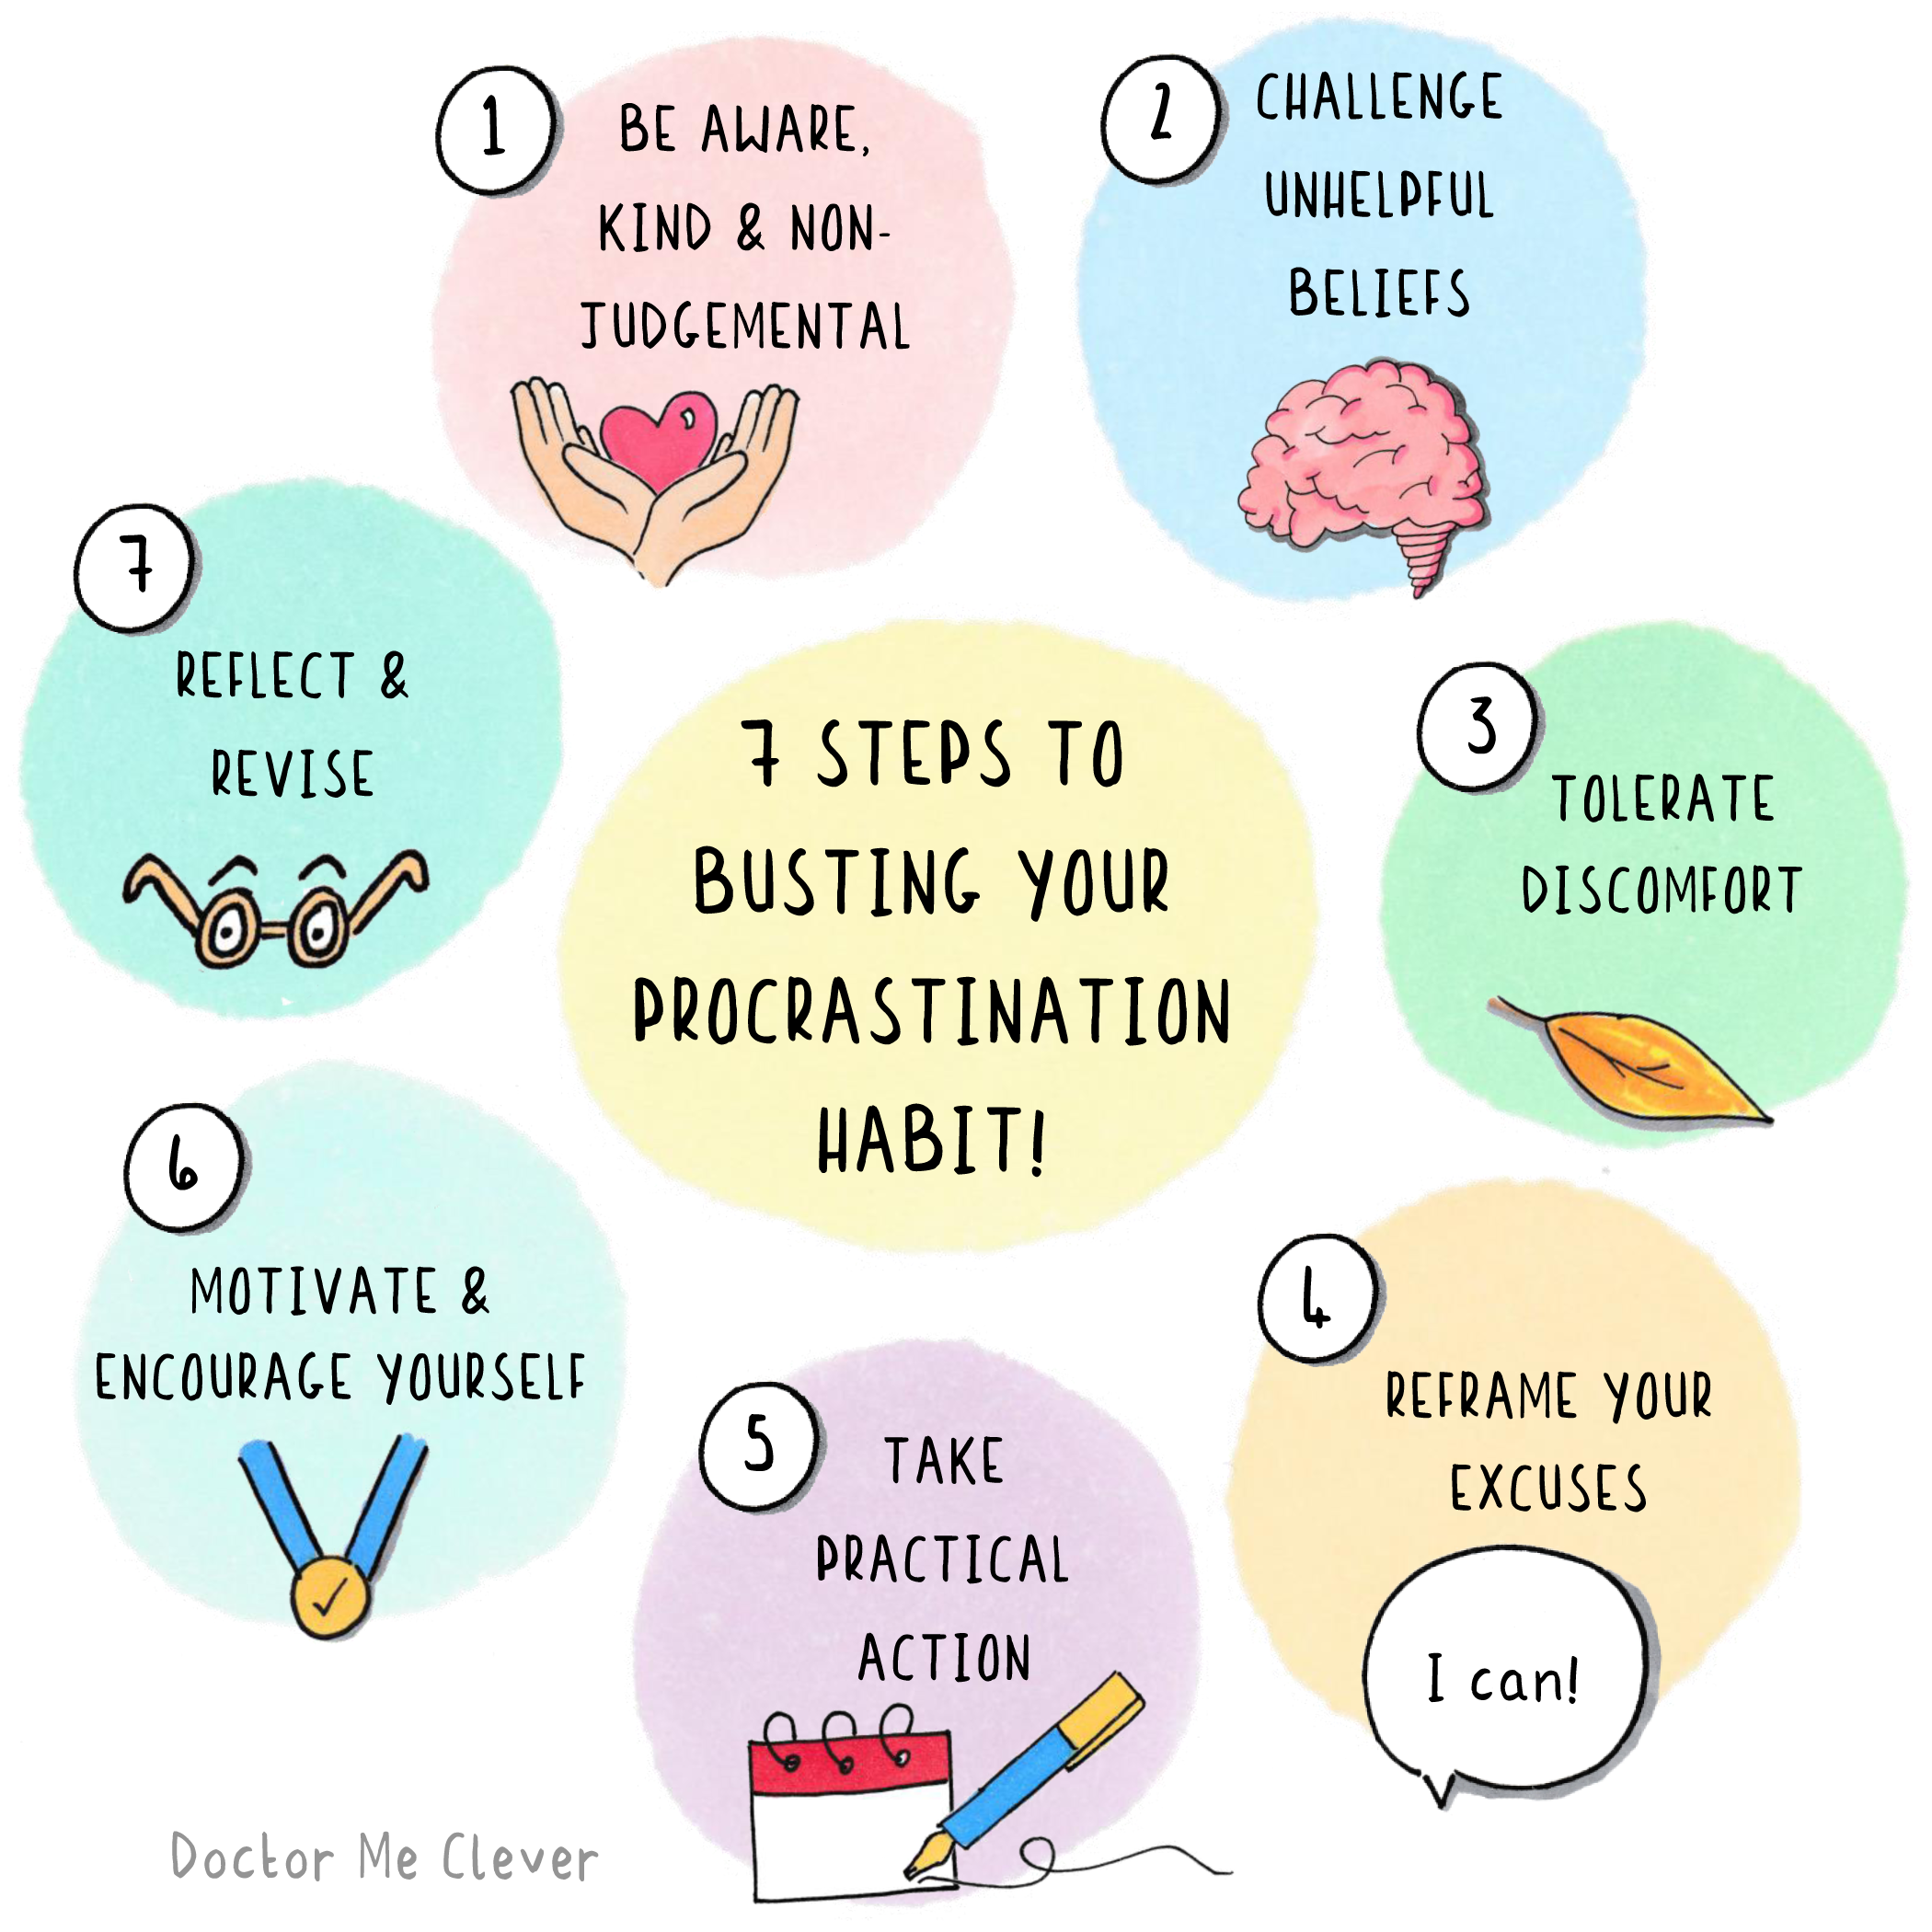 essay on how to avoid procrastination